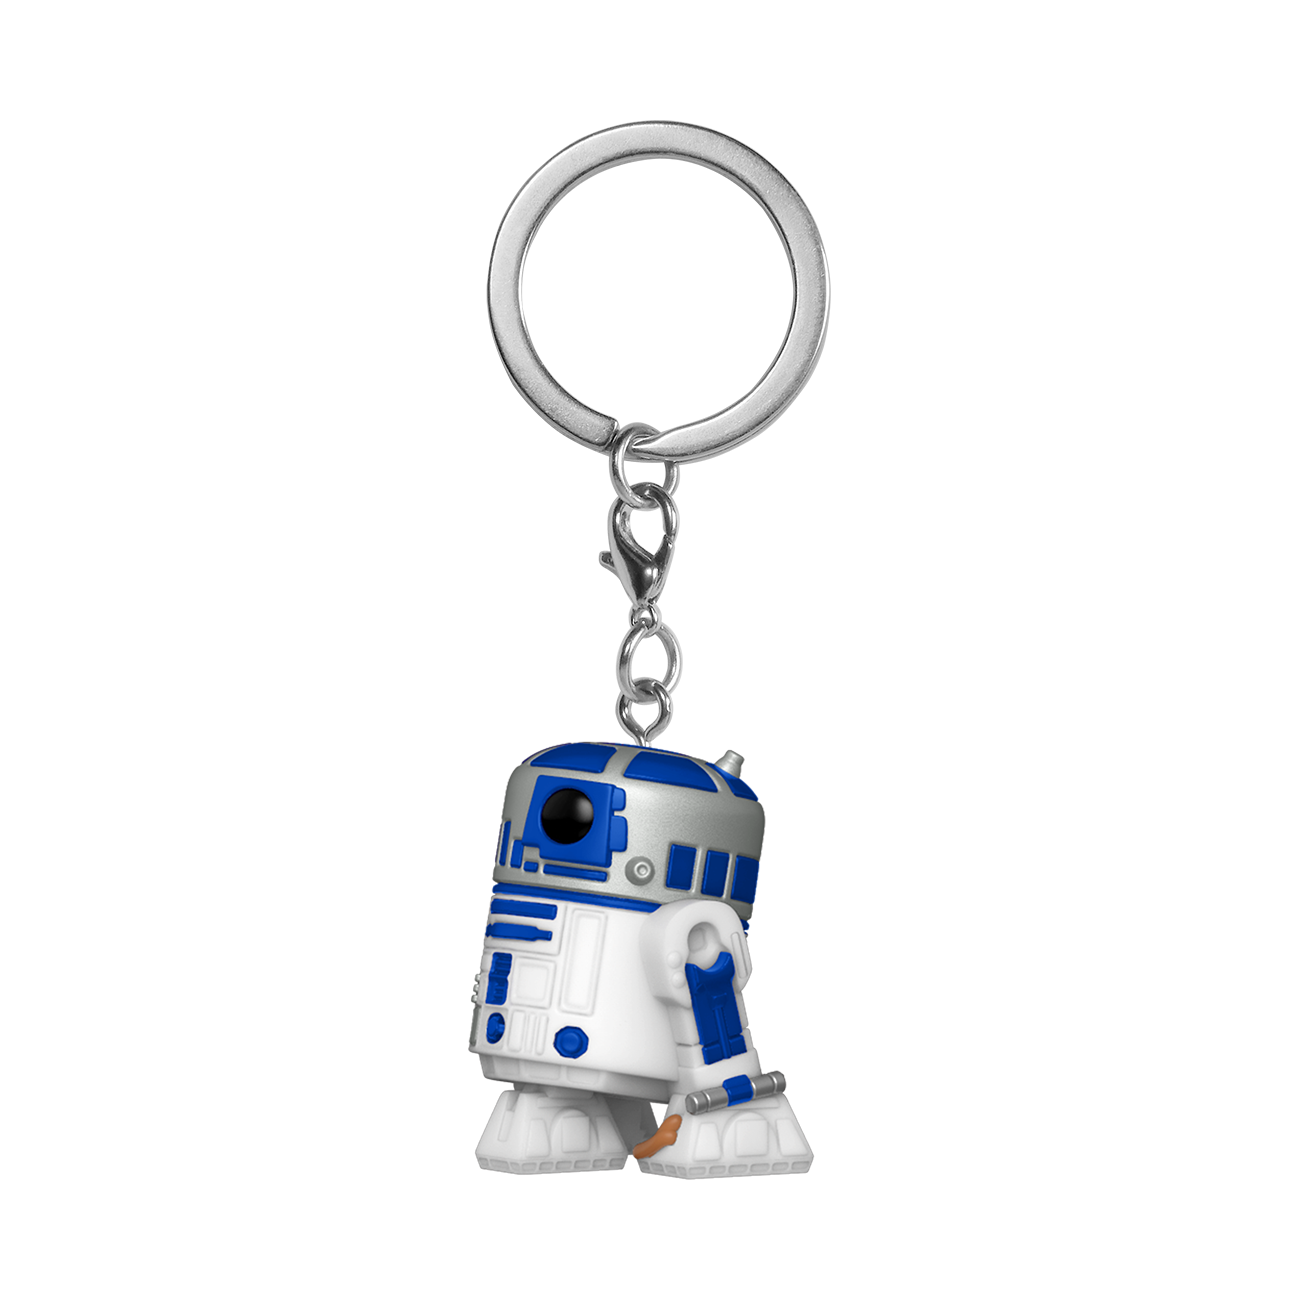 Funko Pop Keychain: Star Wars Clasicos - R2 D2 Llavero